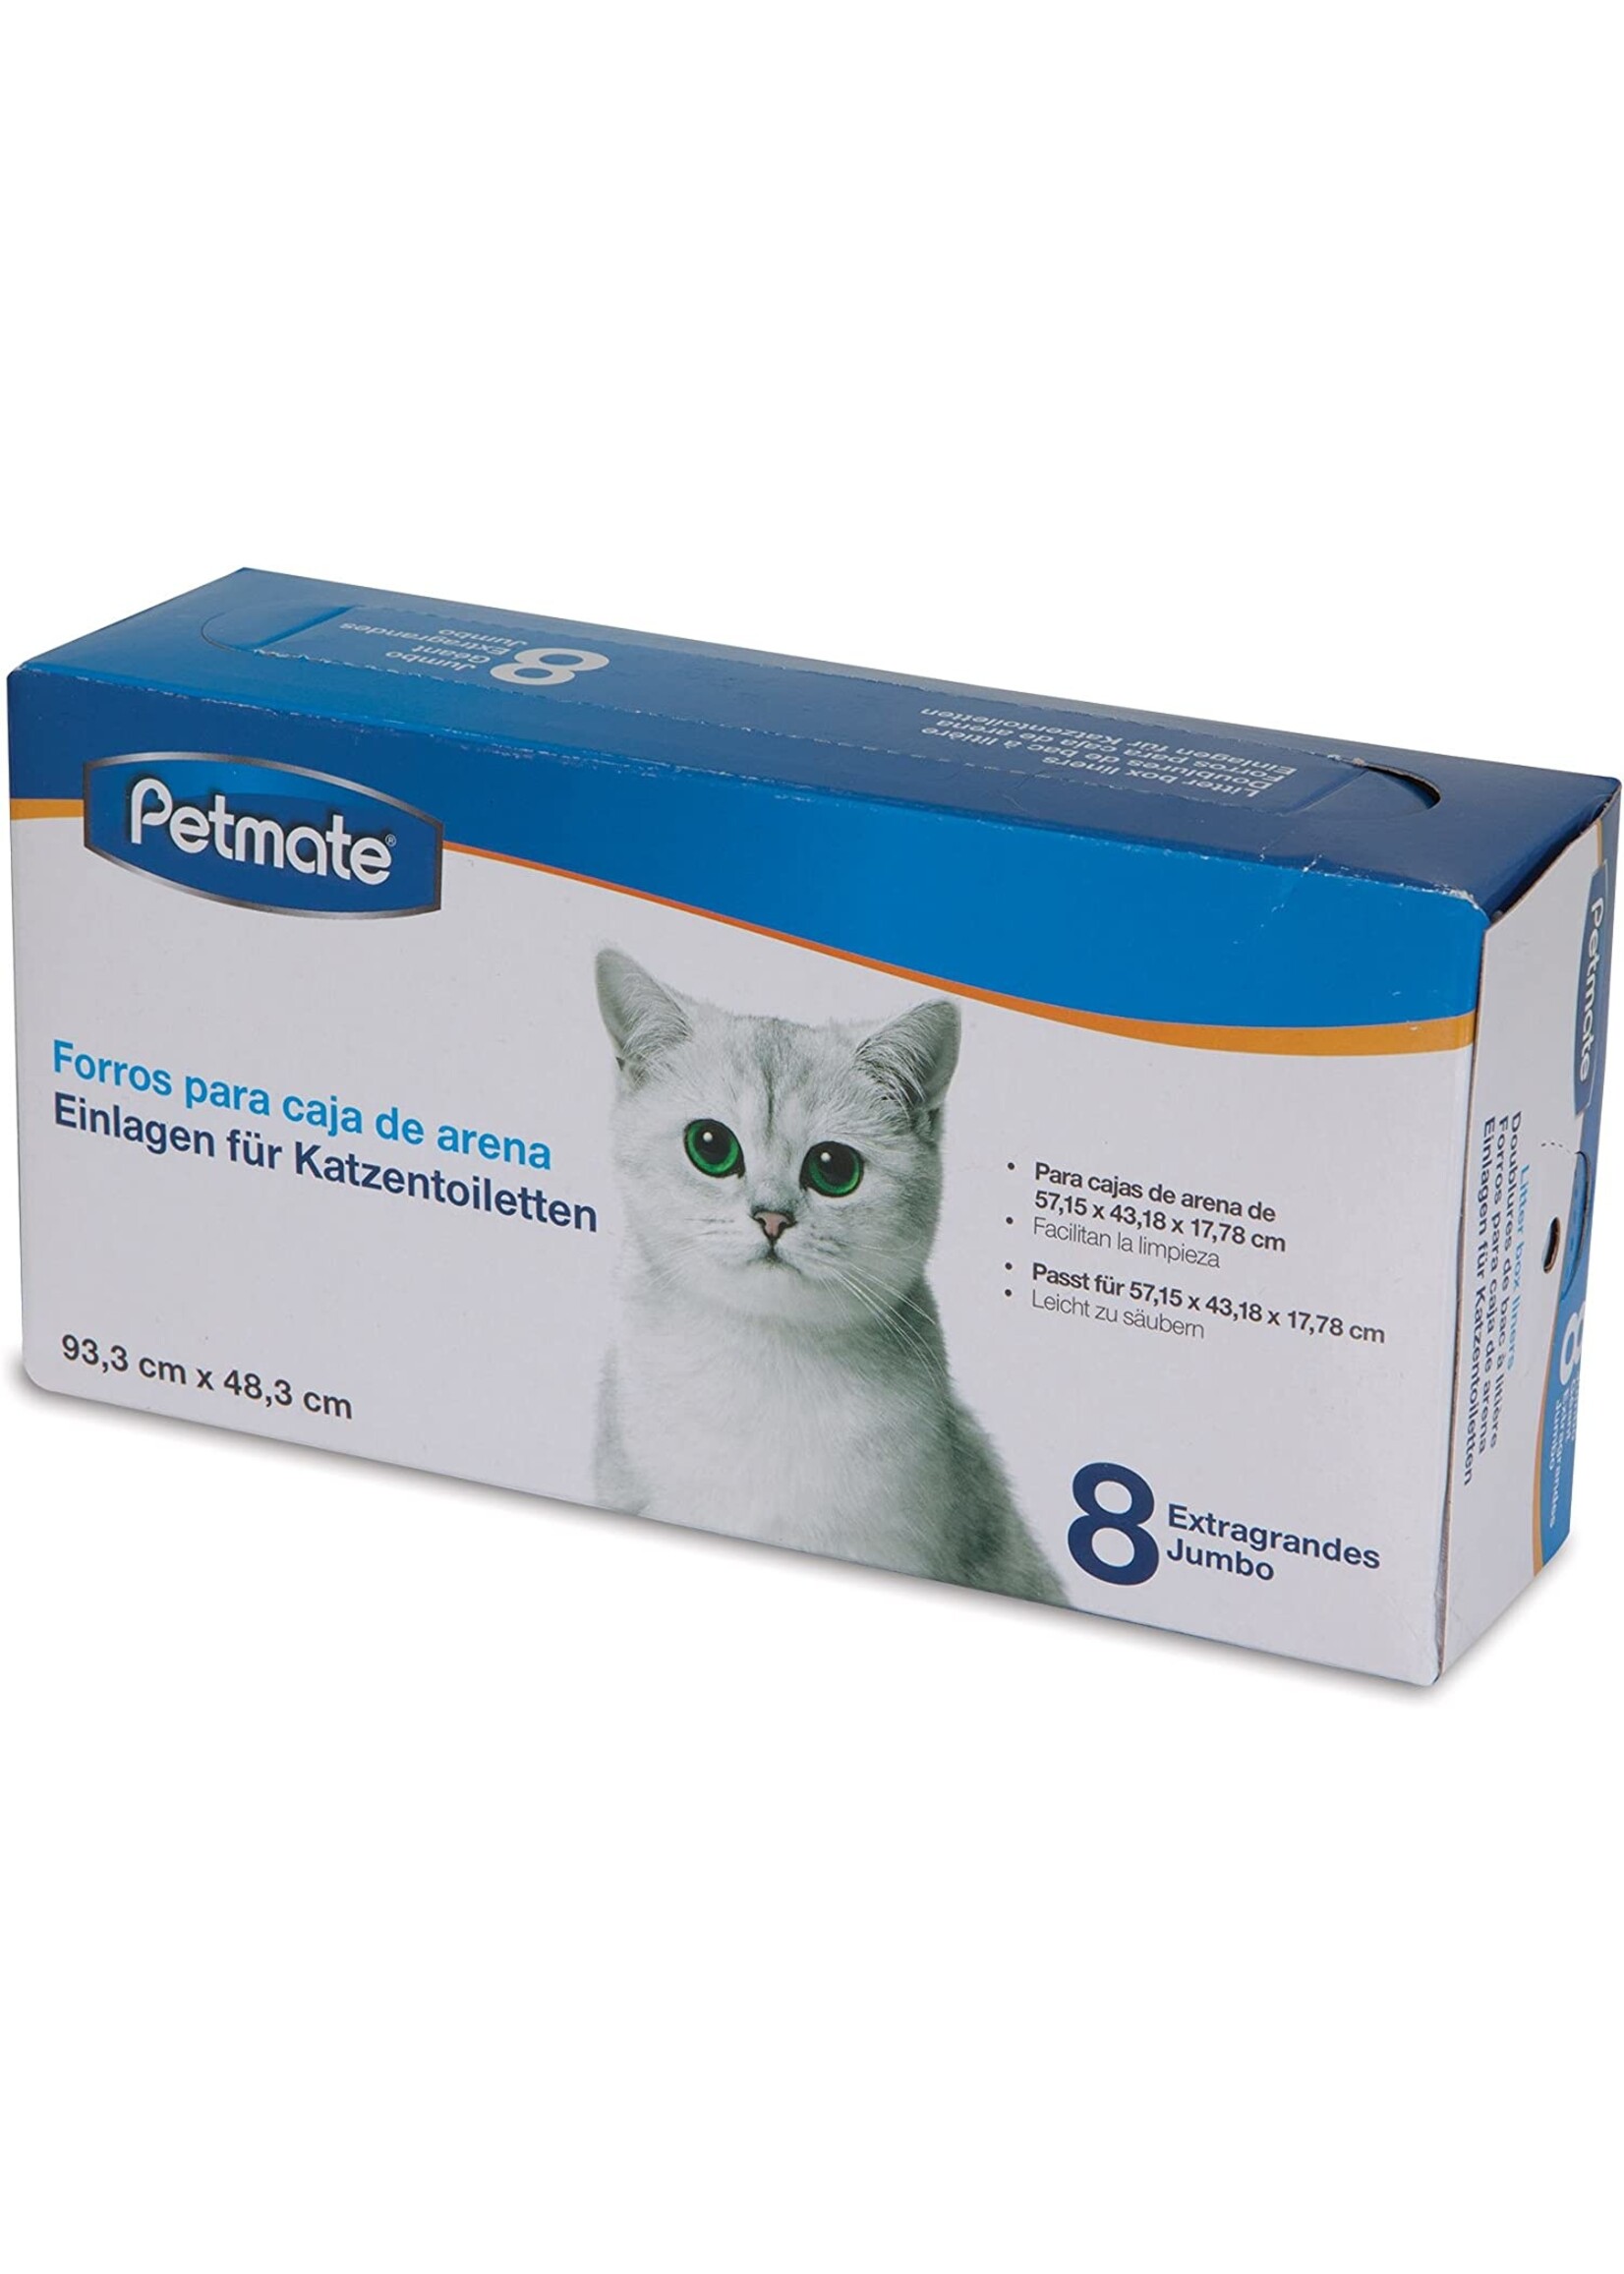 PetMate Petmate Litter Box Liners 8Jumbo 36.75x19"